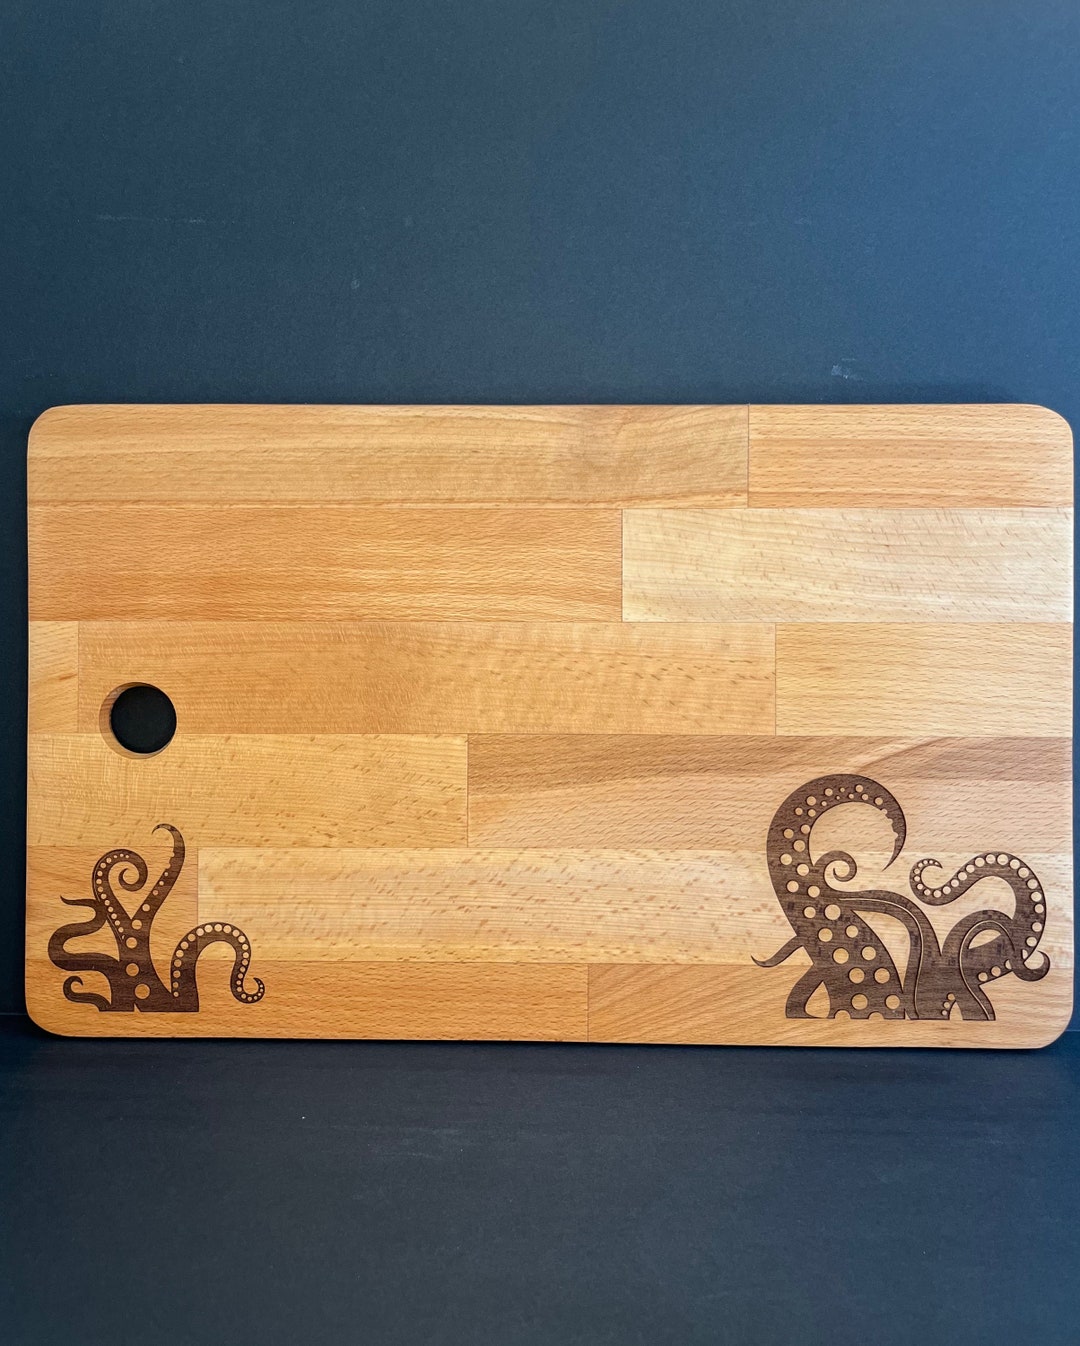 Octopus Tentacles Bamboo Cutting Board - Large (11x14) - Dark Fox Design